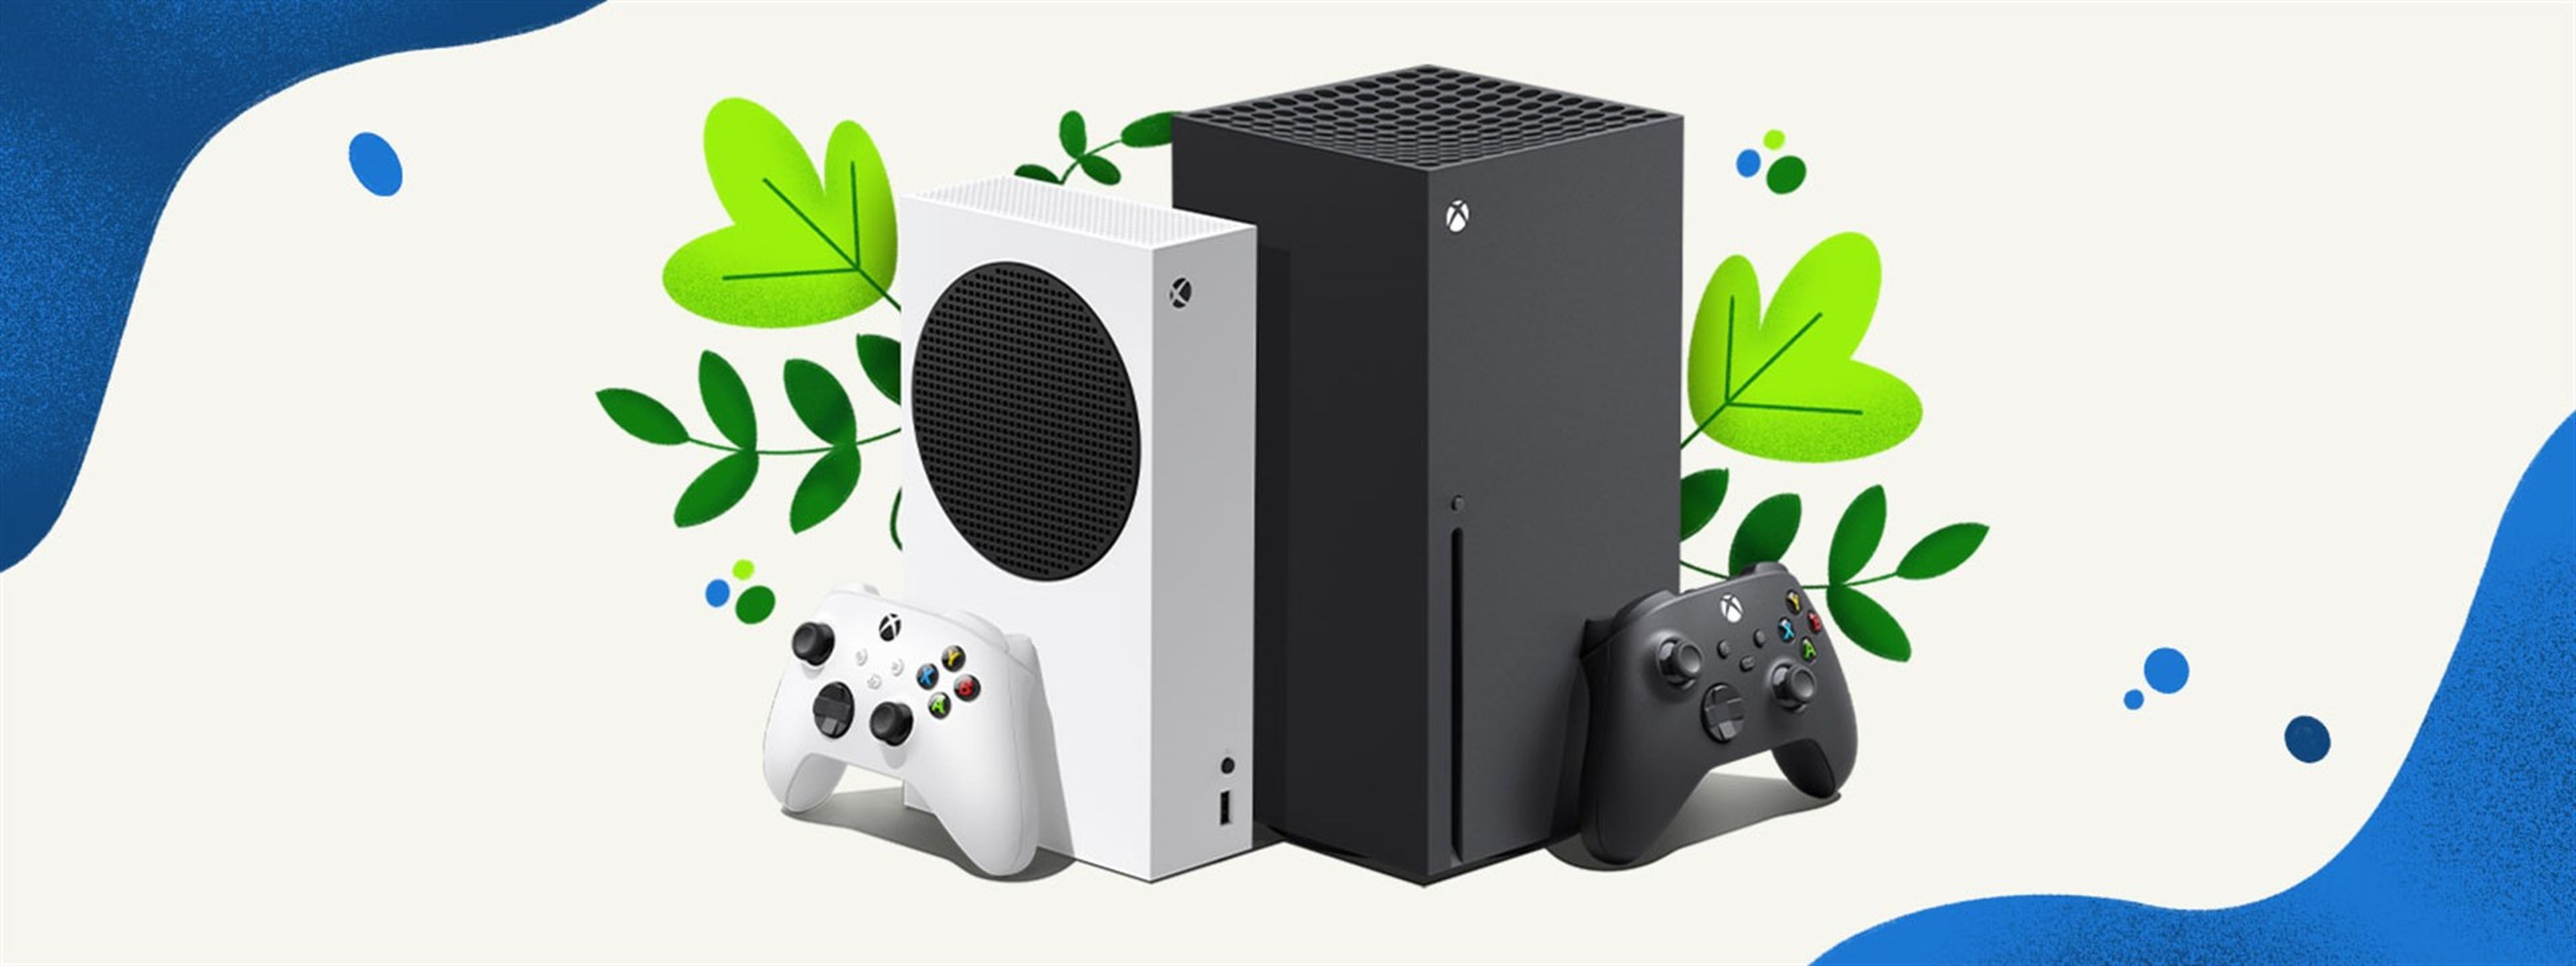 Xbox Series X|S - Huella de carbono